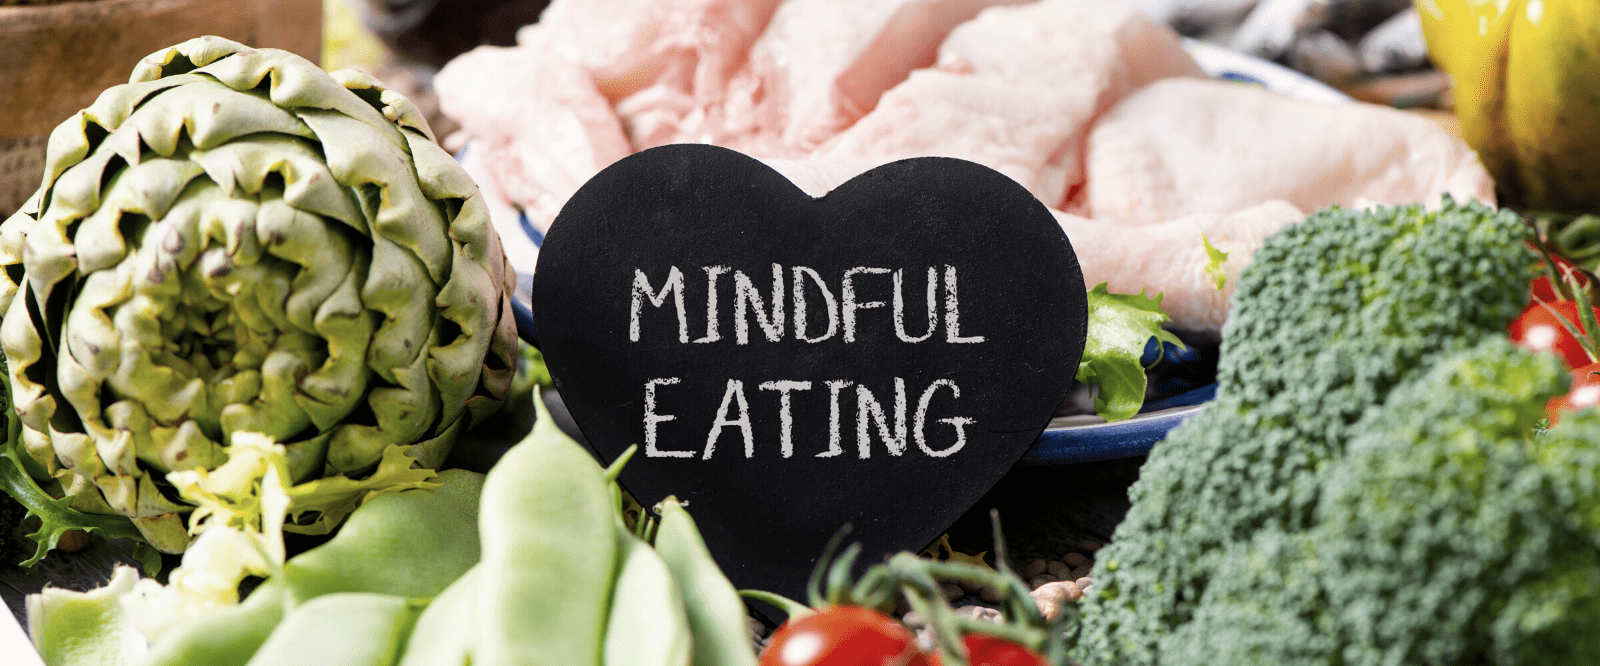 mindful eating sign surrounded by fresh foods donating by nefertem holistic skincare